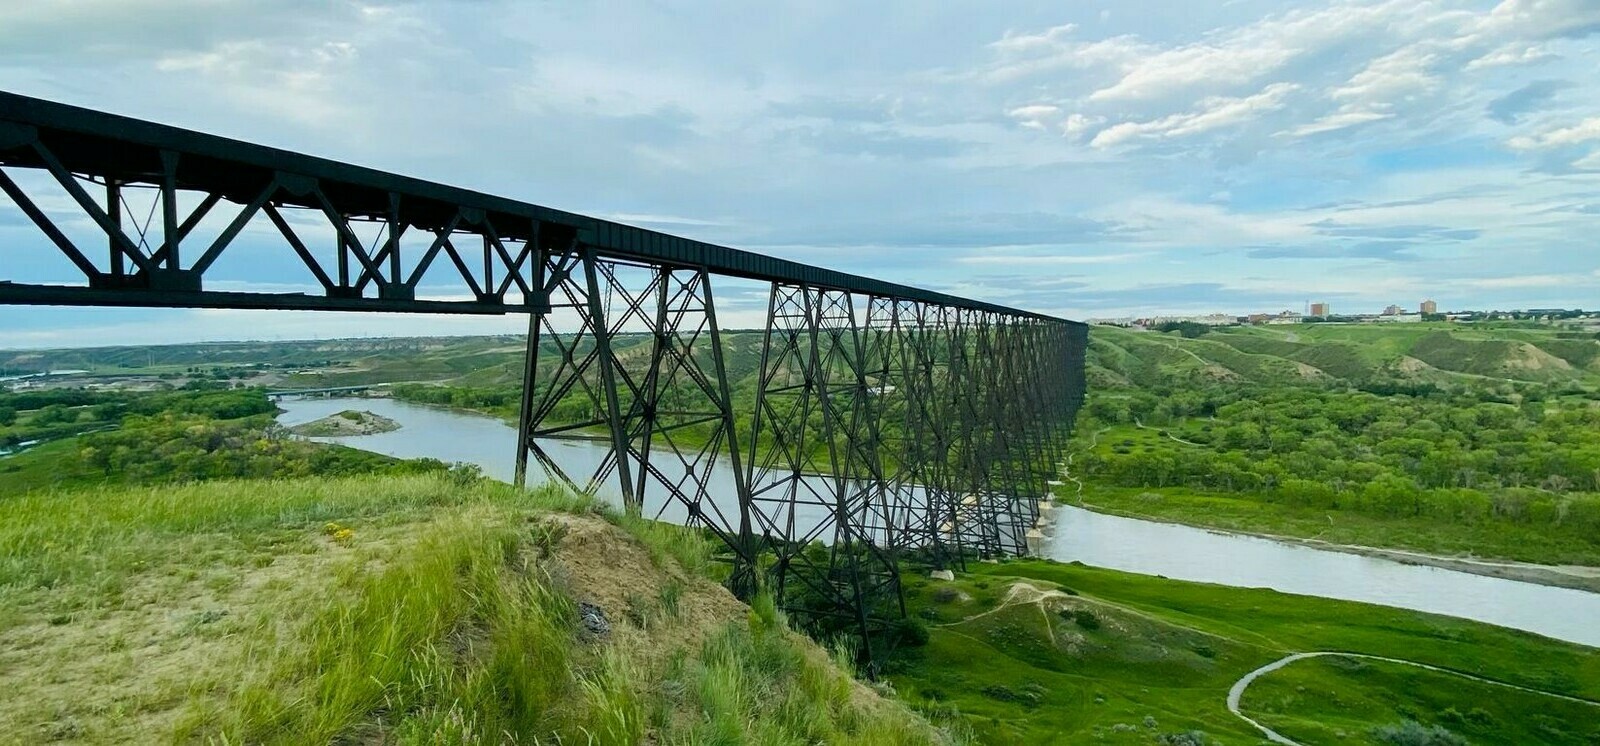 High Level Bridge